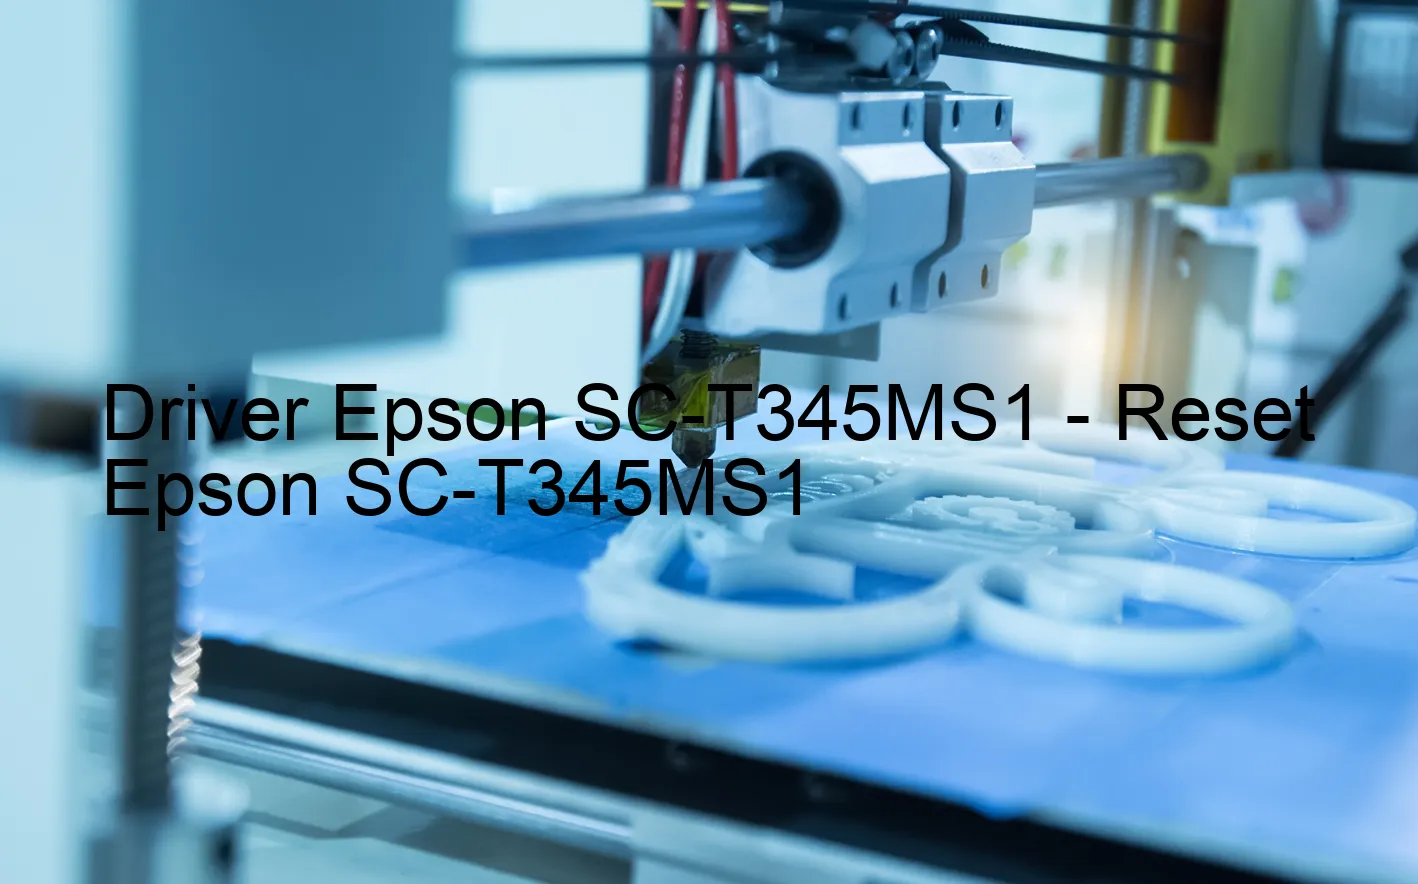 Epson SC-T345MS1のドライバー、Epson SC-T345MS1のリセットソフトウェア